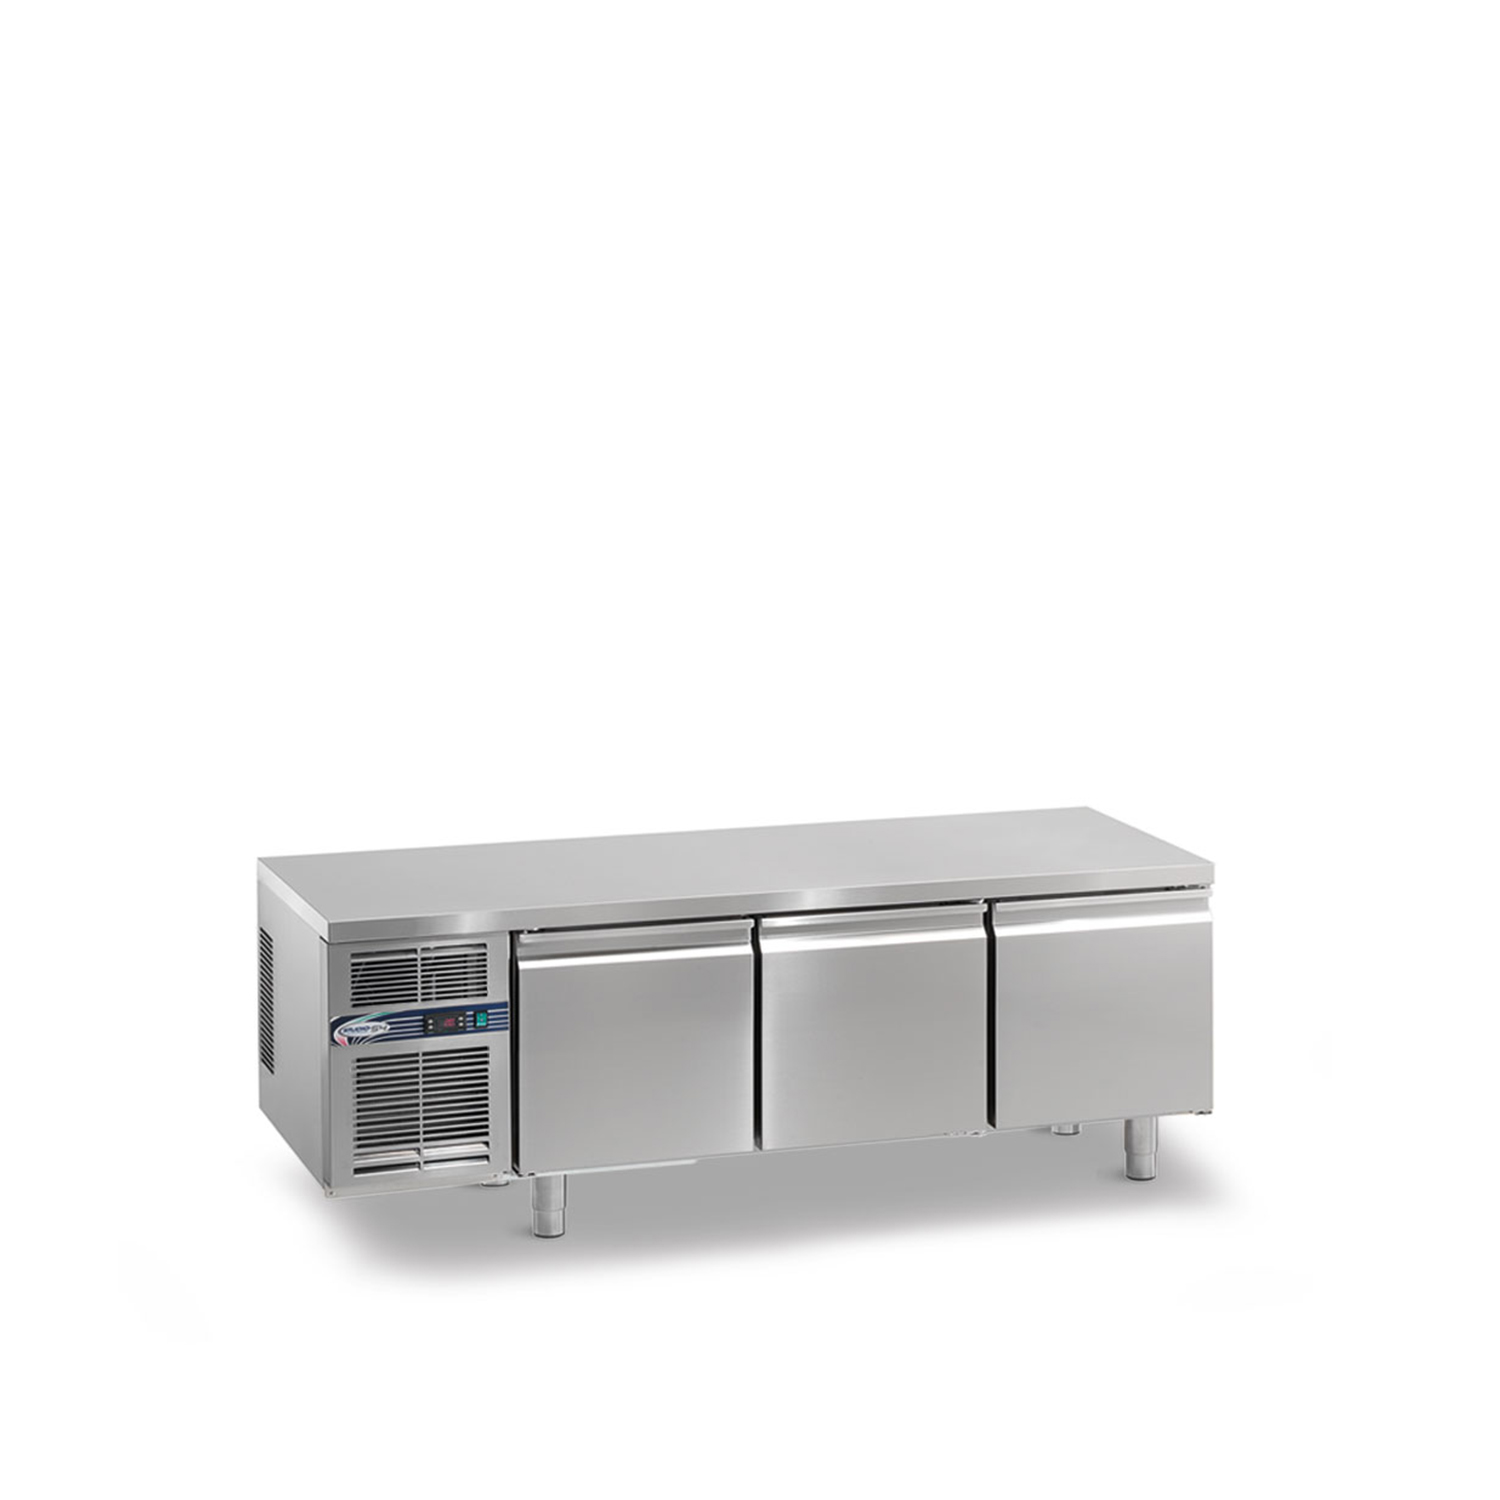 Kühltisch DAIQUIRI Top Line H450 GN 1/1, B 1740  x T 700 x H 640 mm, 3 Kühlfächer, Arbeitsplatte